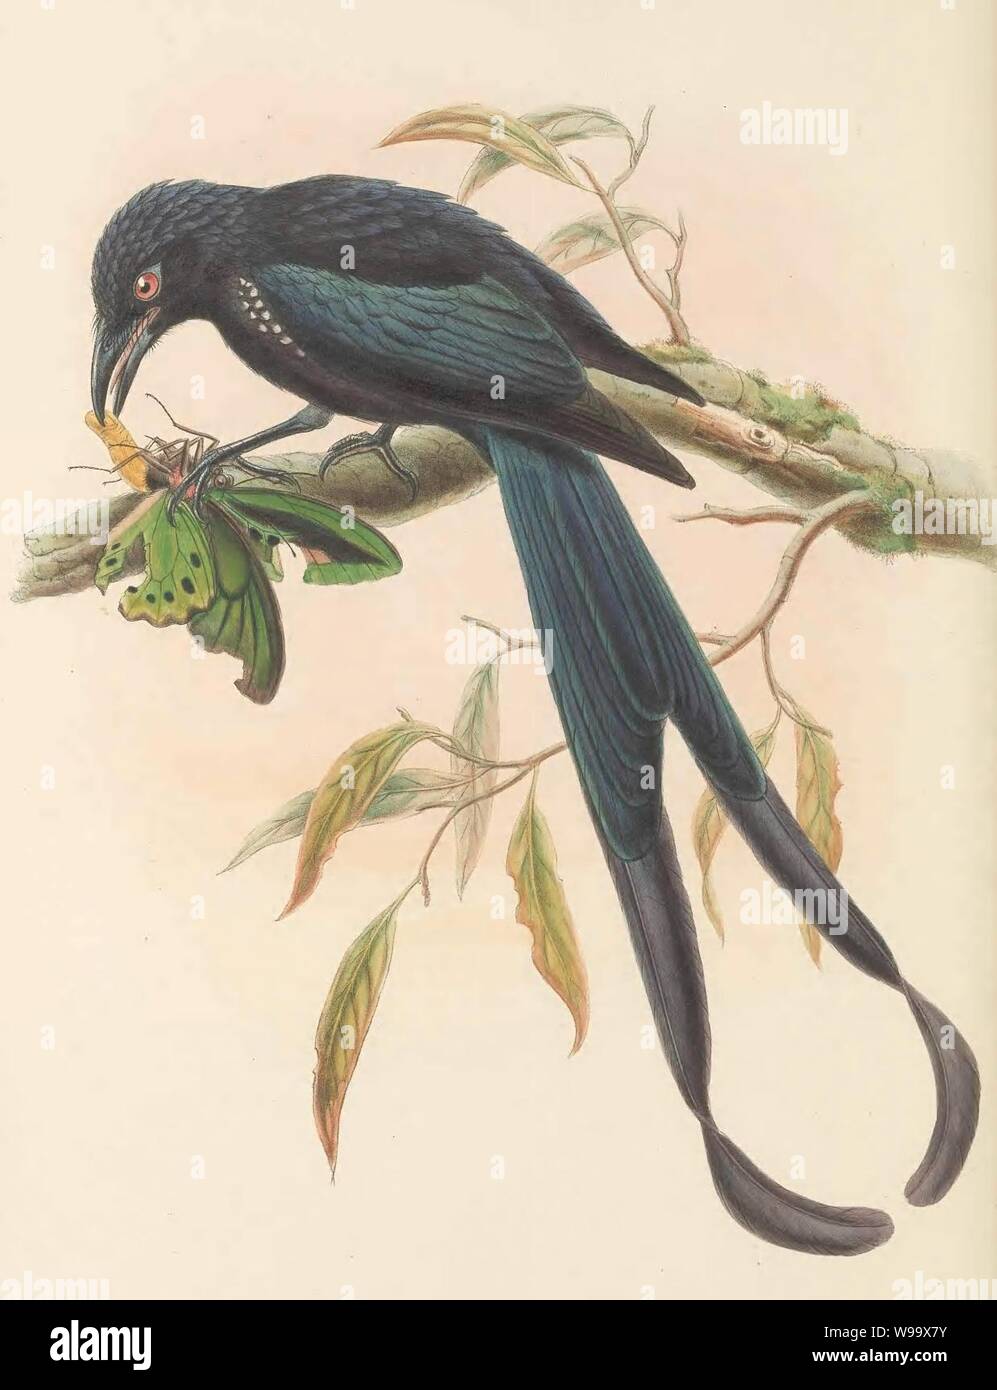 Dicranostreptus megarhynchus - The Birds of New Guinea (cropped). Stock Photo